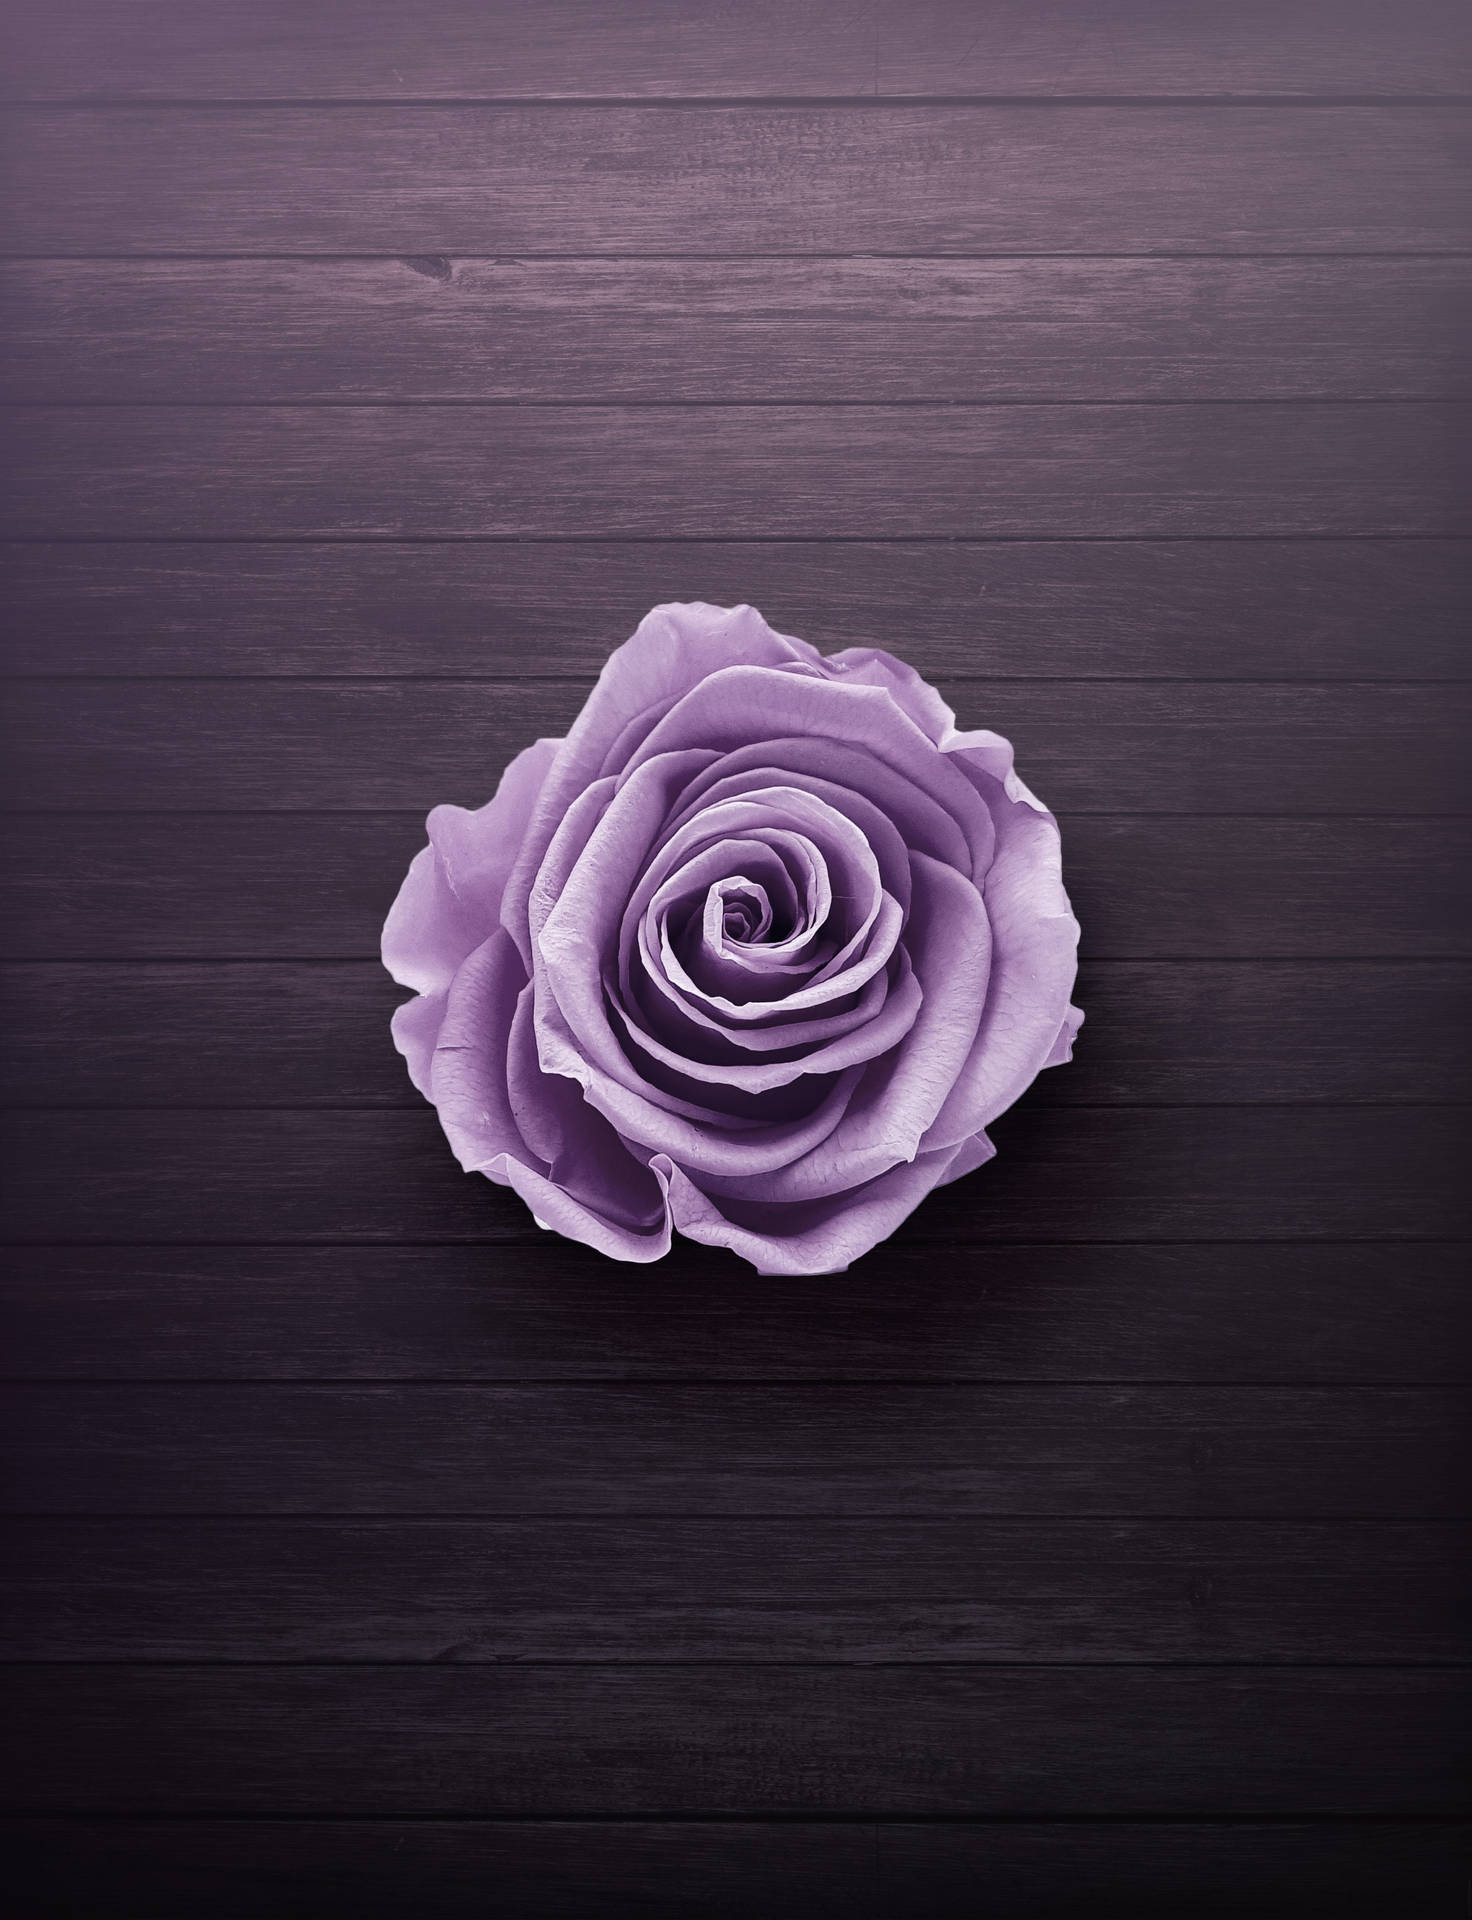 Rose On Wood Neon Purple Iphone